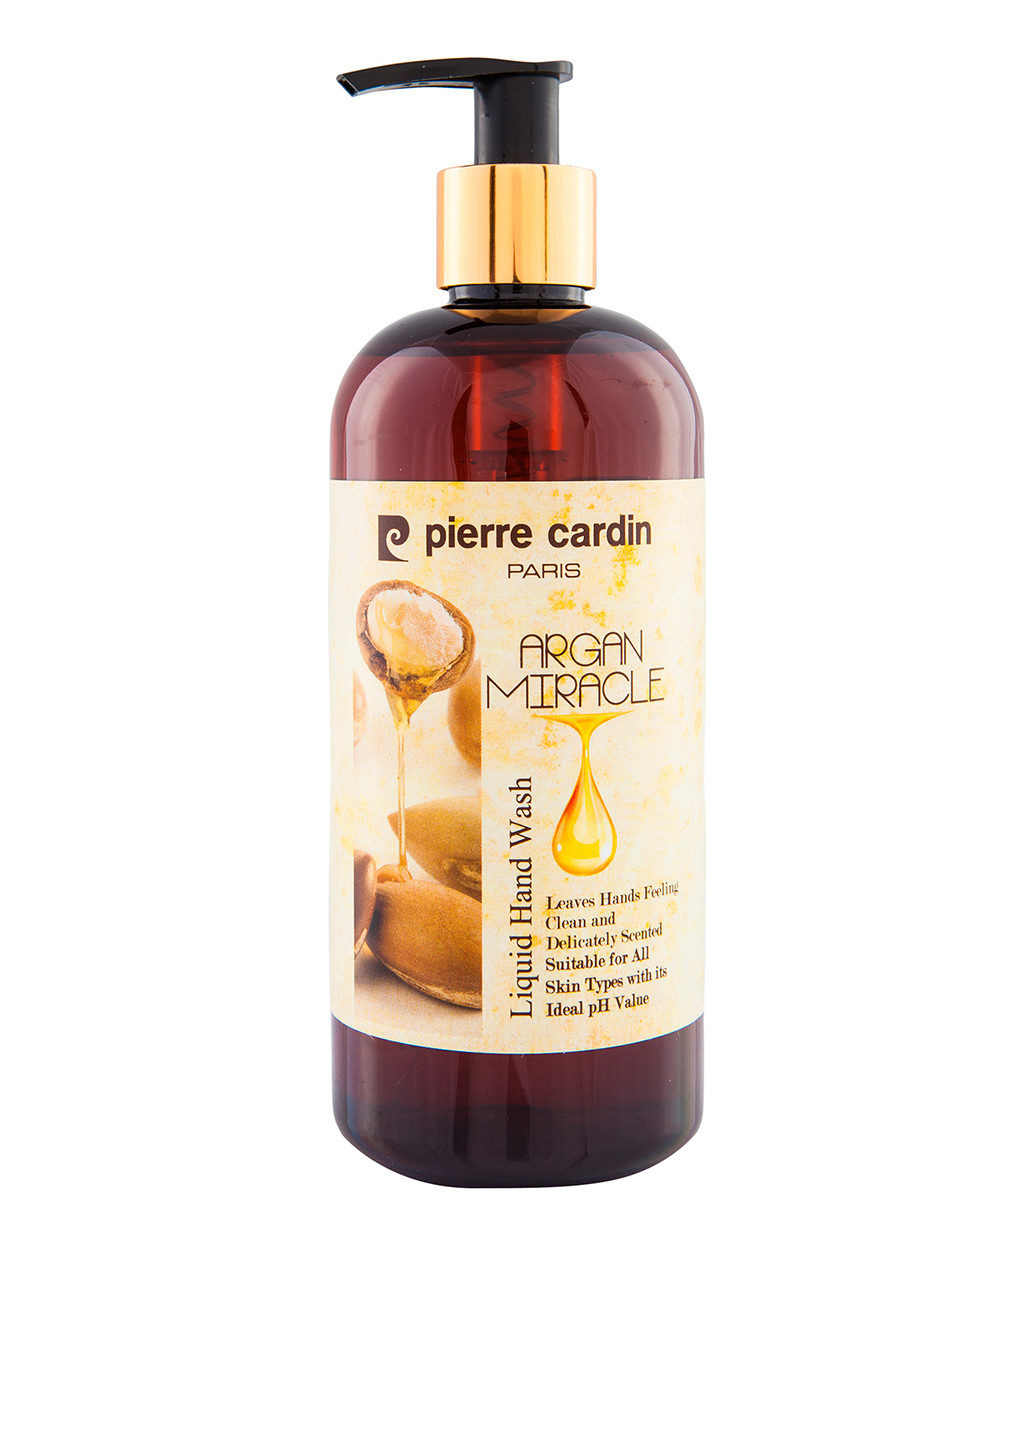 Жидкое мыло Argan Miracle, 400 мл Pierre Cardin Paris (160737426)